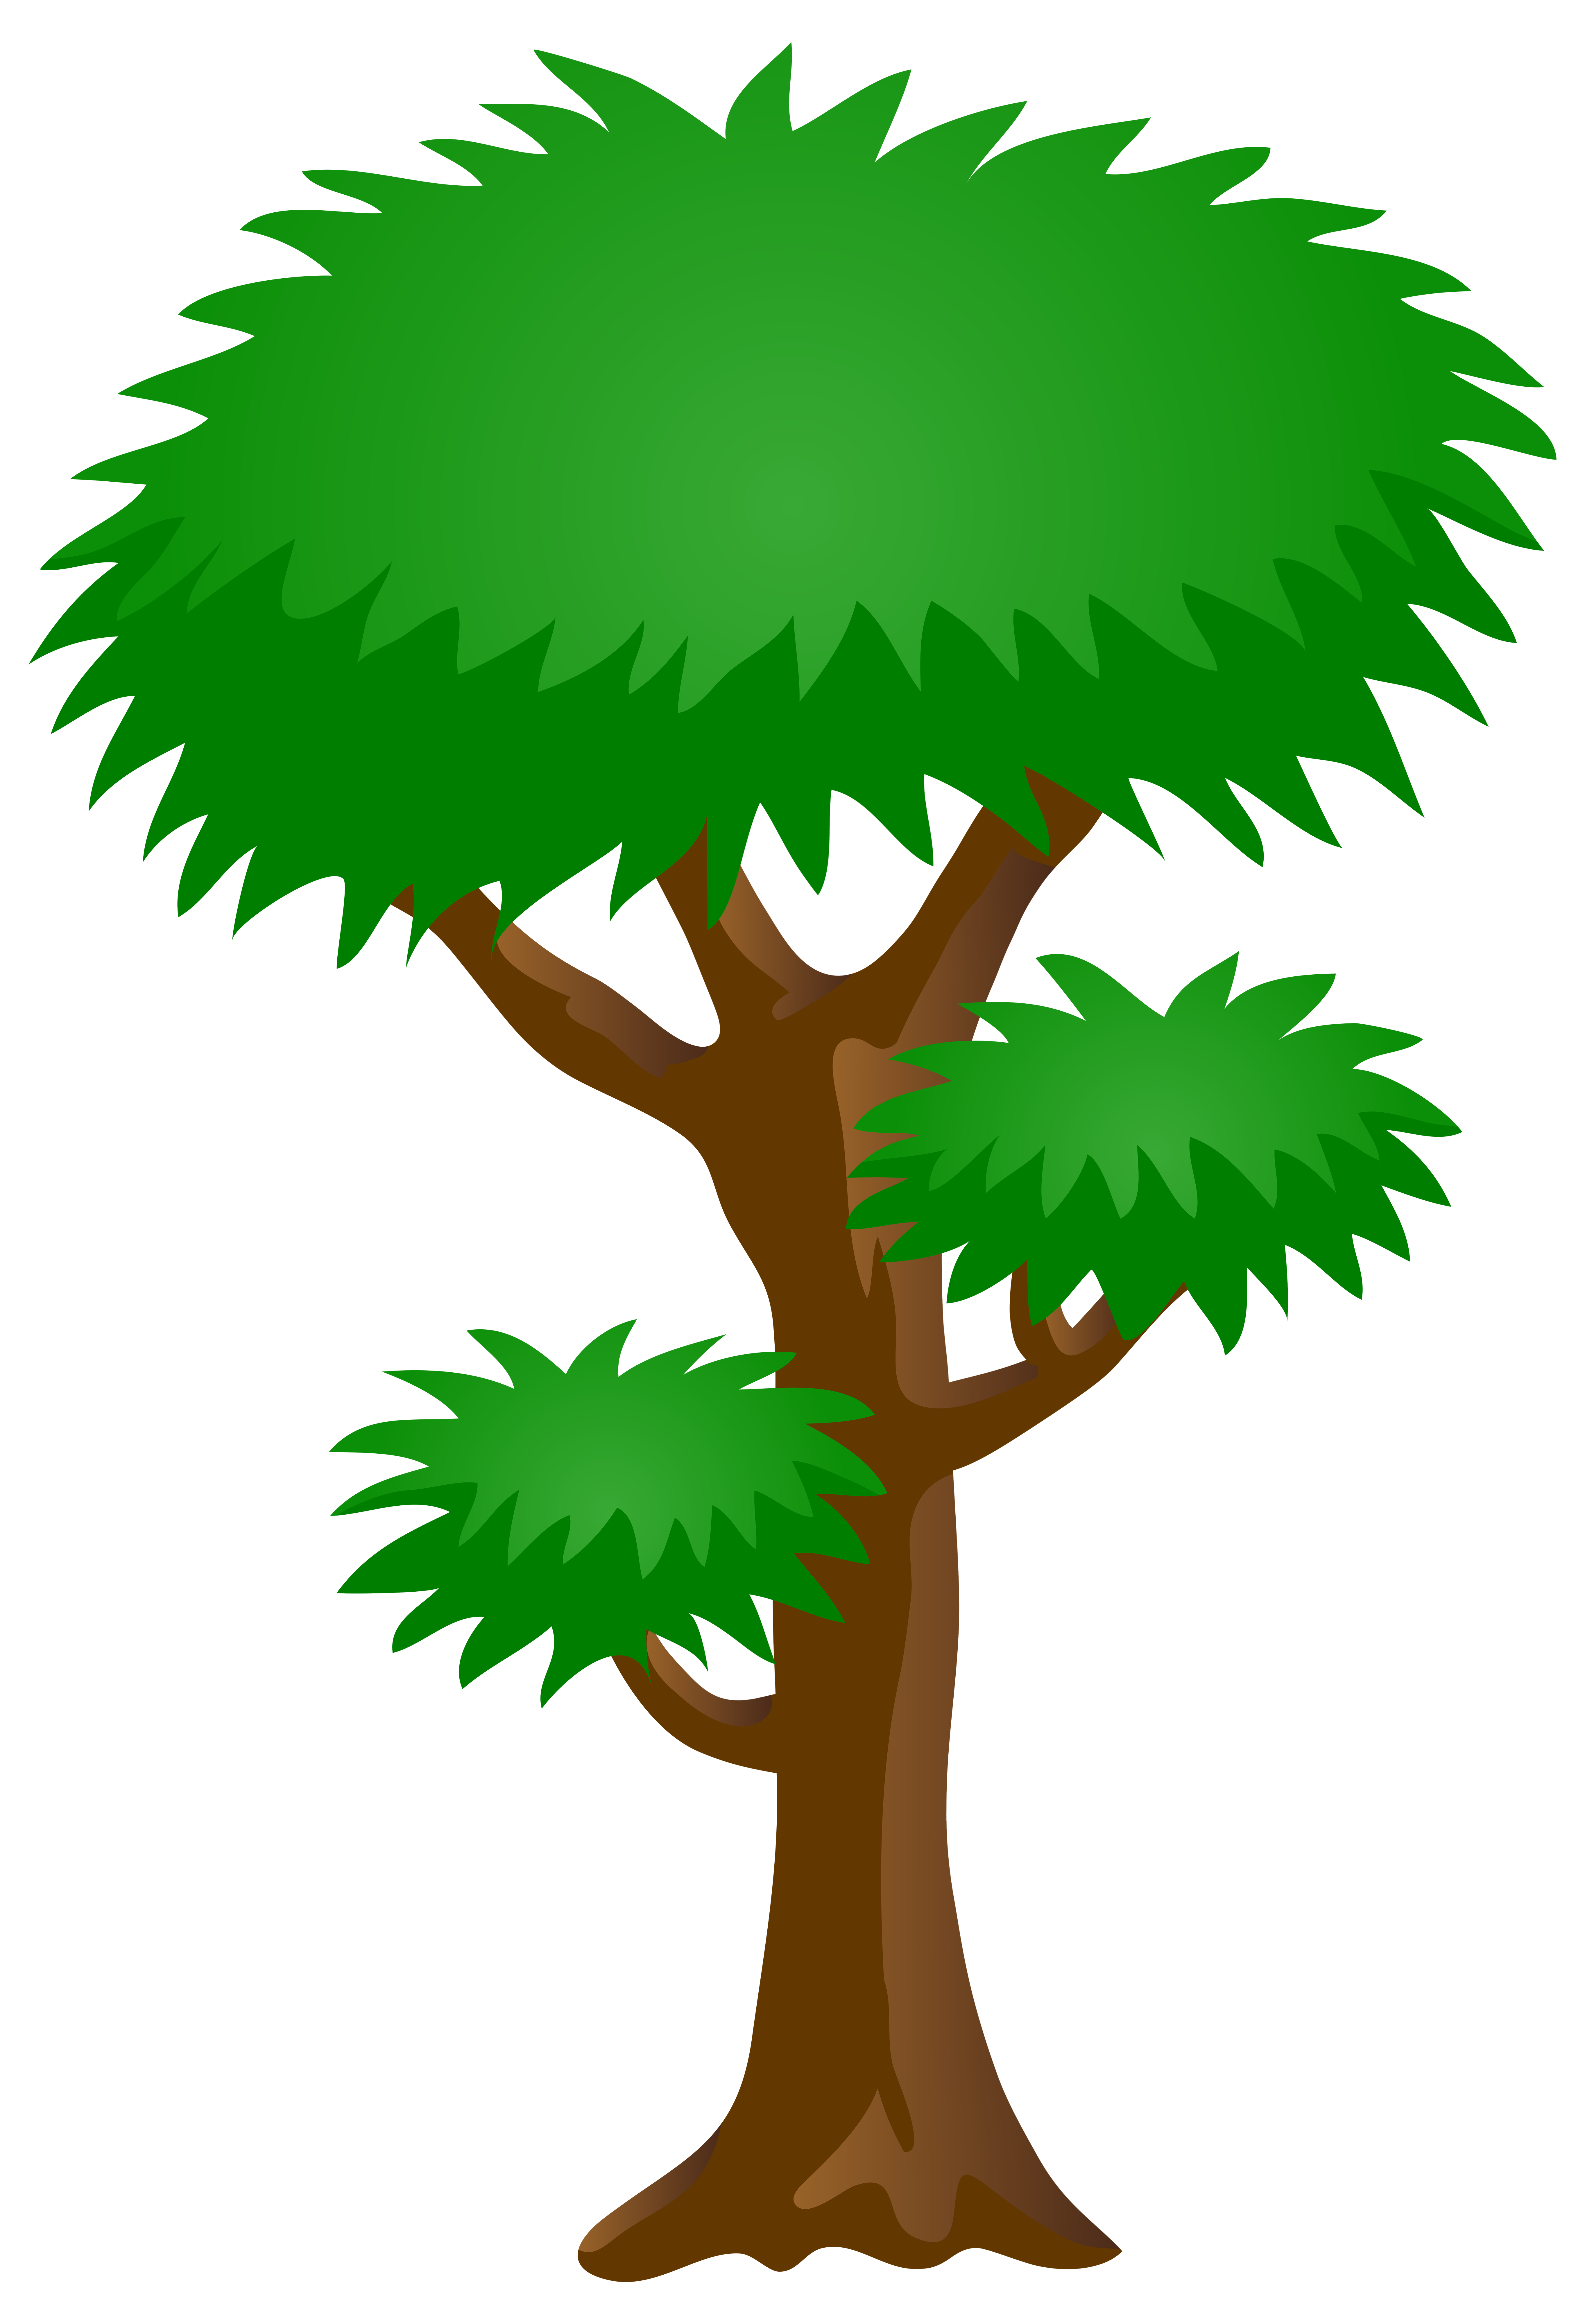 Green Tree PNG Clip Art Image